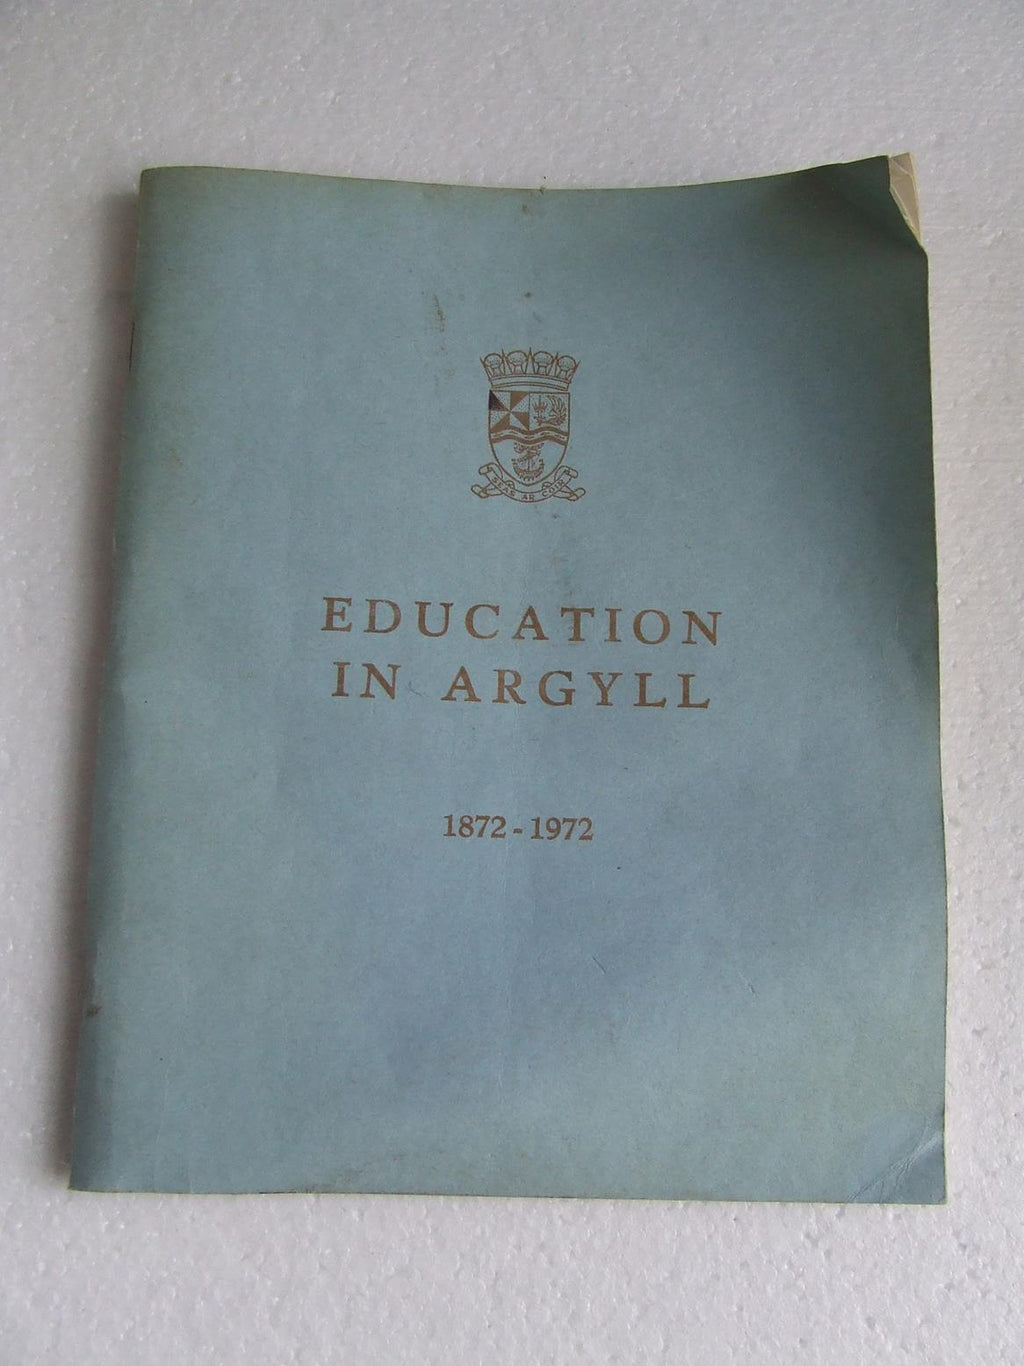 Education in Argyll 1872-1972